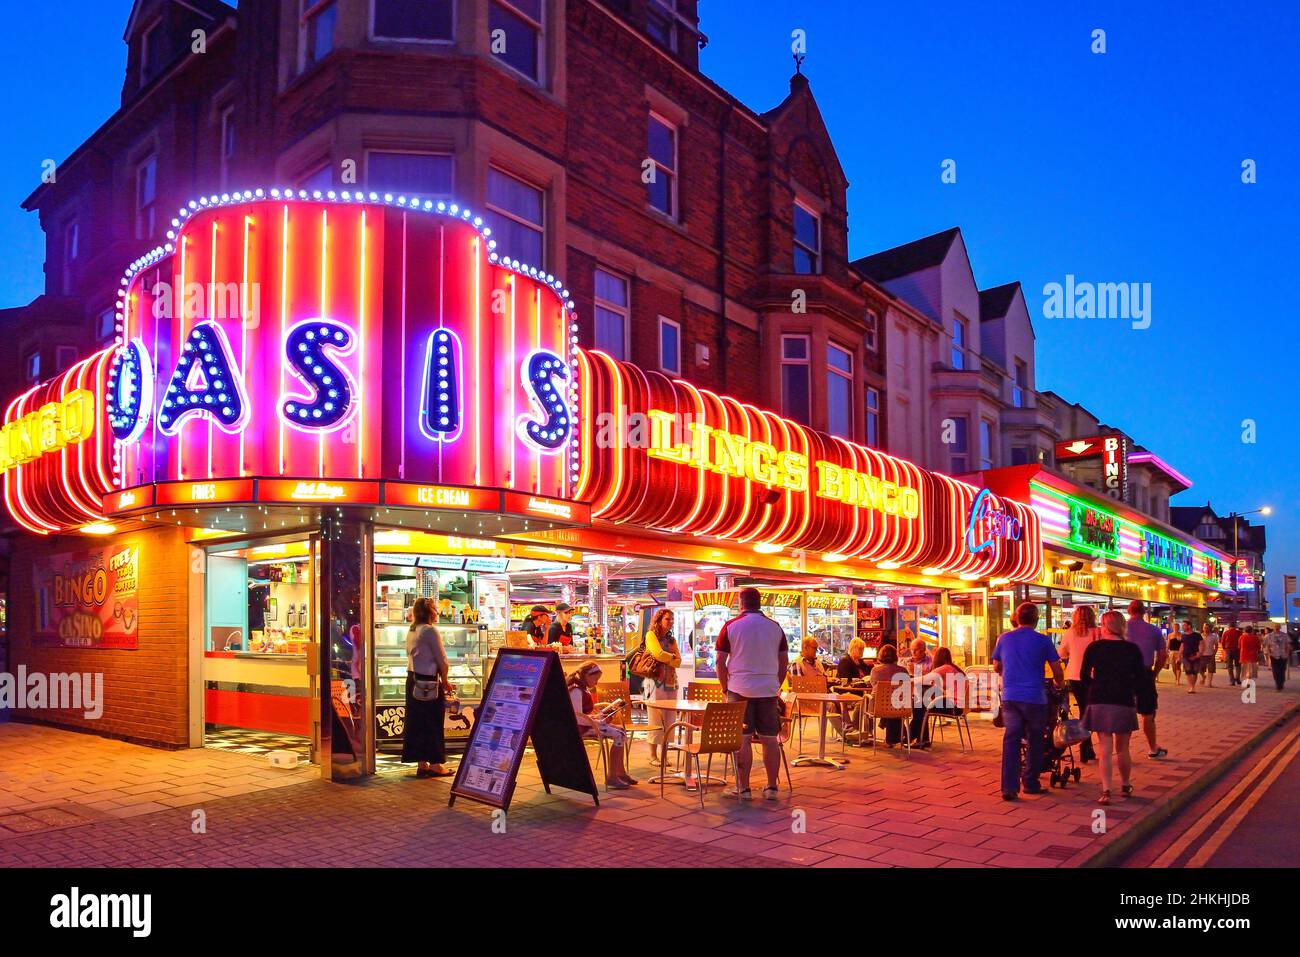 Oasis Bingo Hall at dusk, Grand Parade, Skegness, Lincolnshire, England, United Kingdom Stock Photo